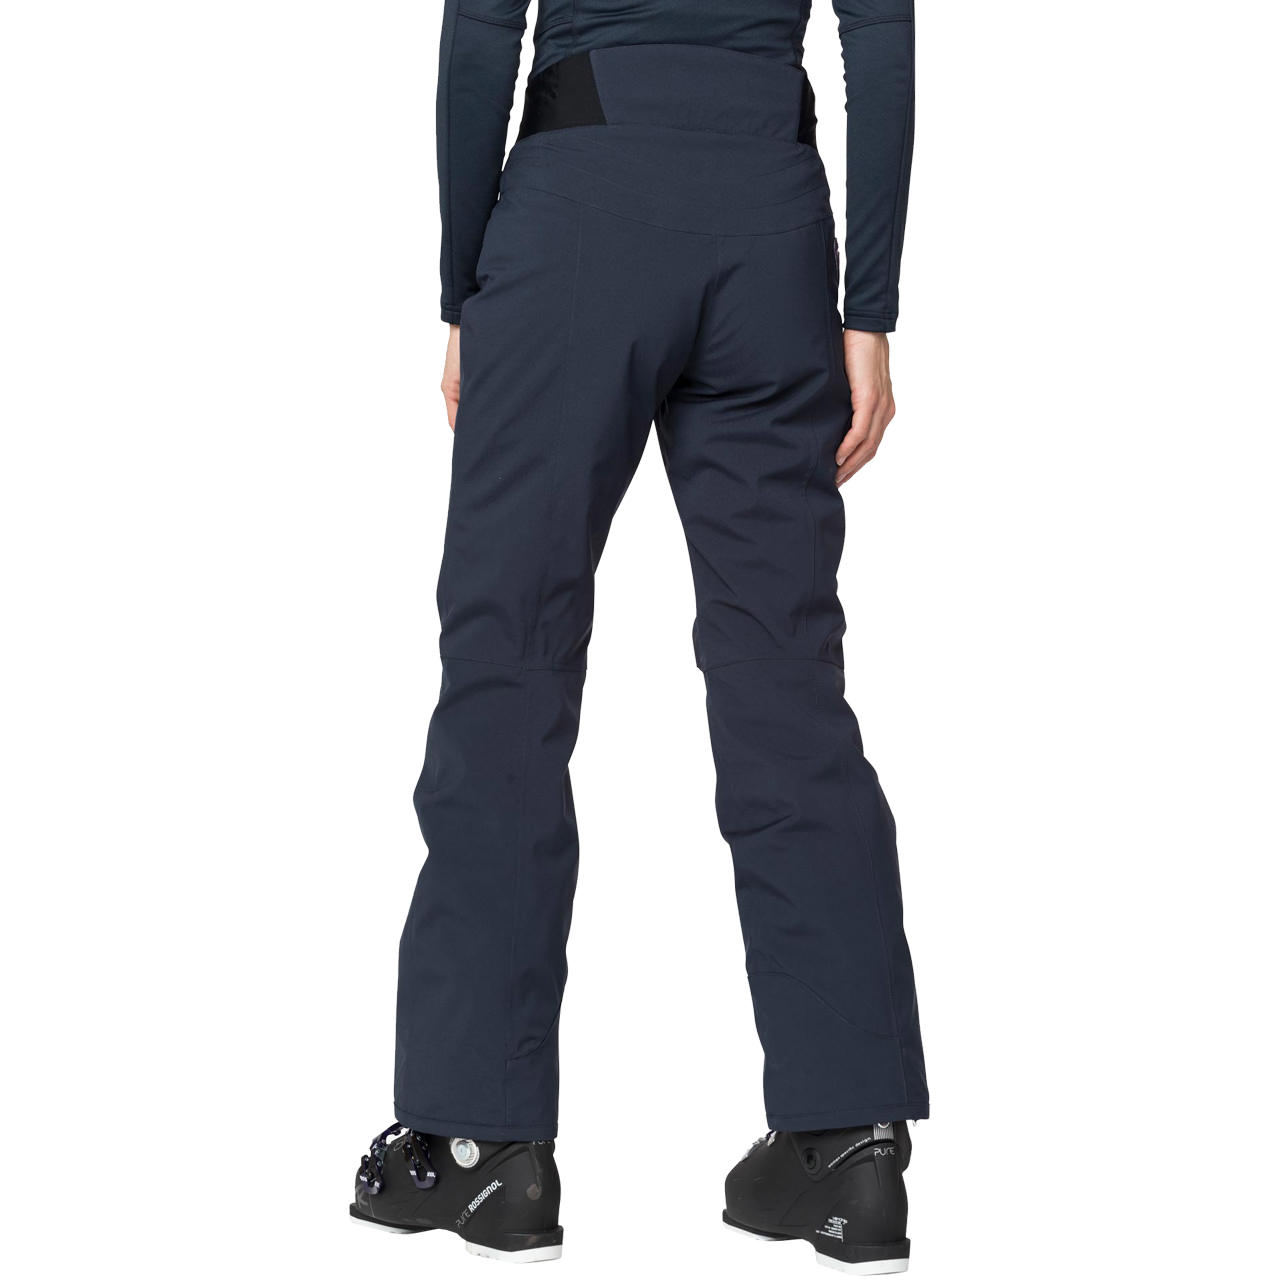 Rossignol Women Pants Classique eclipse blue |Rossignol Skiwear Ladies ...